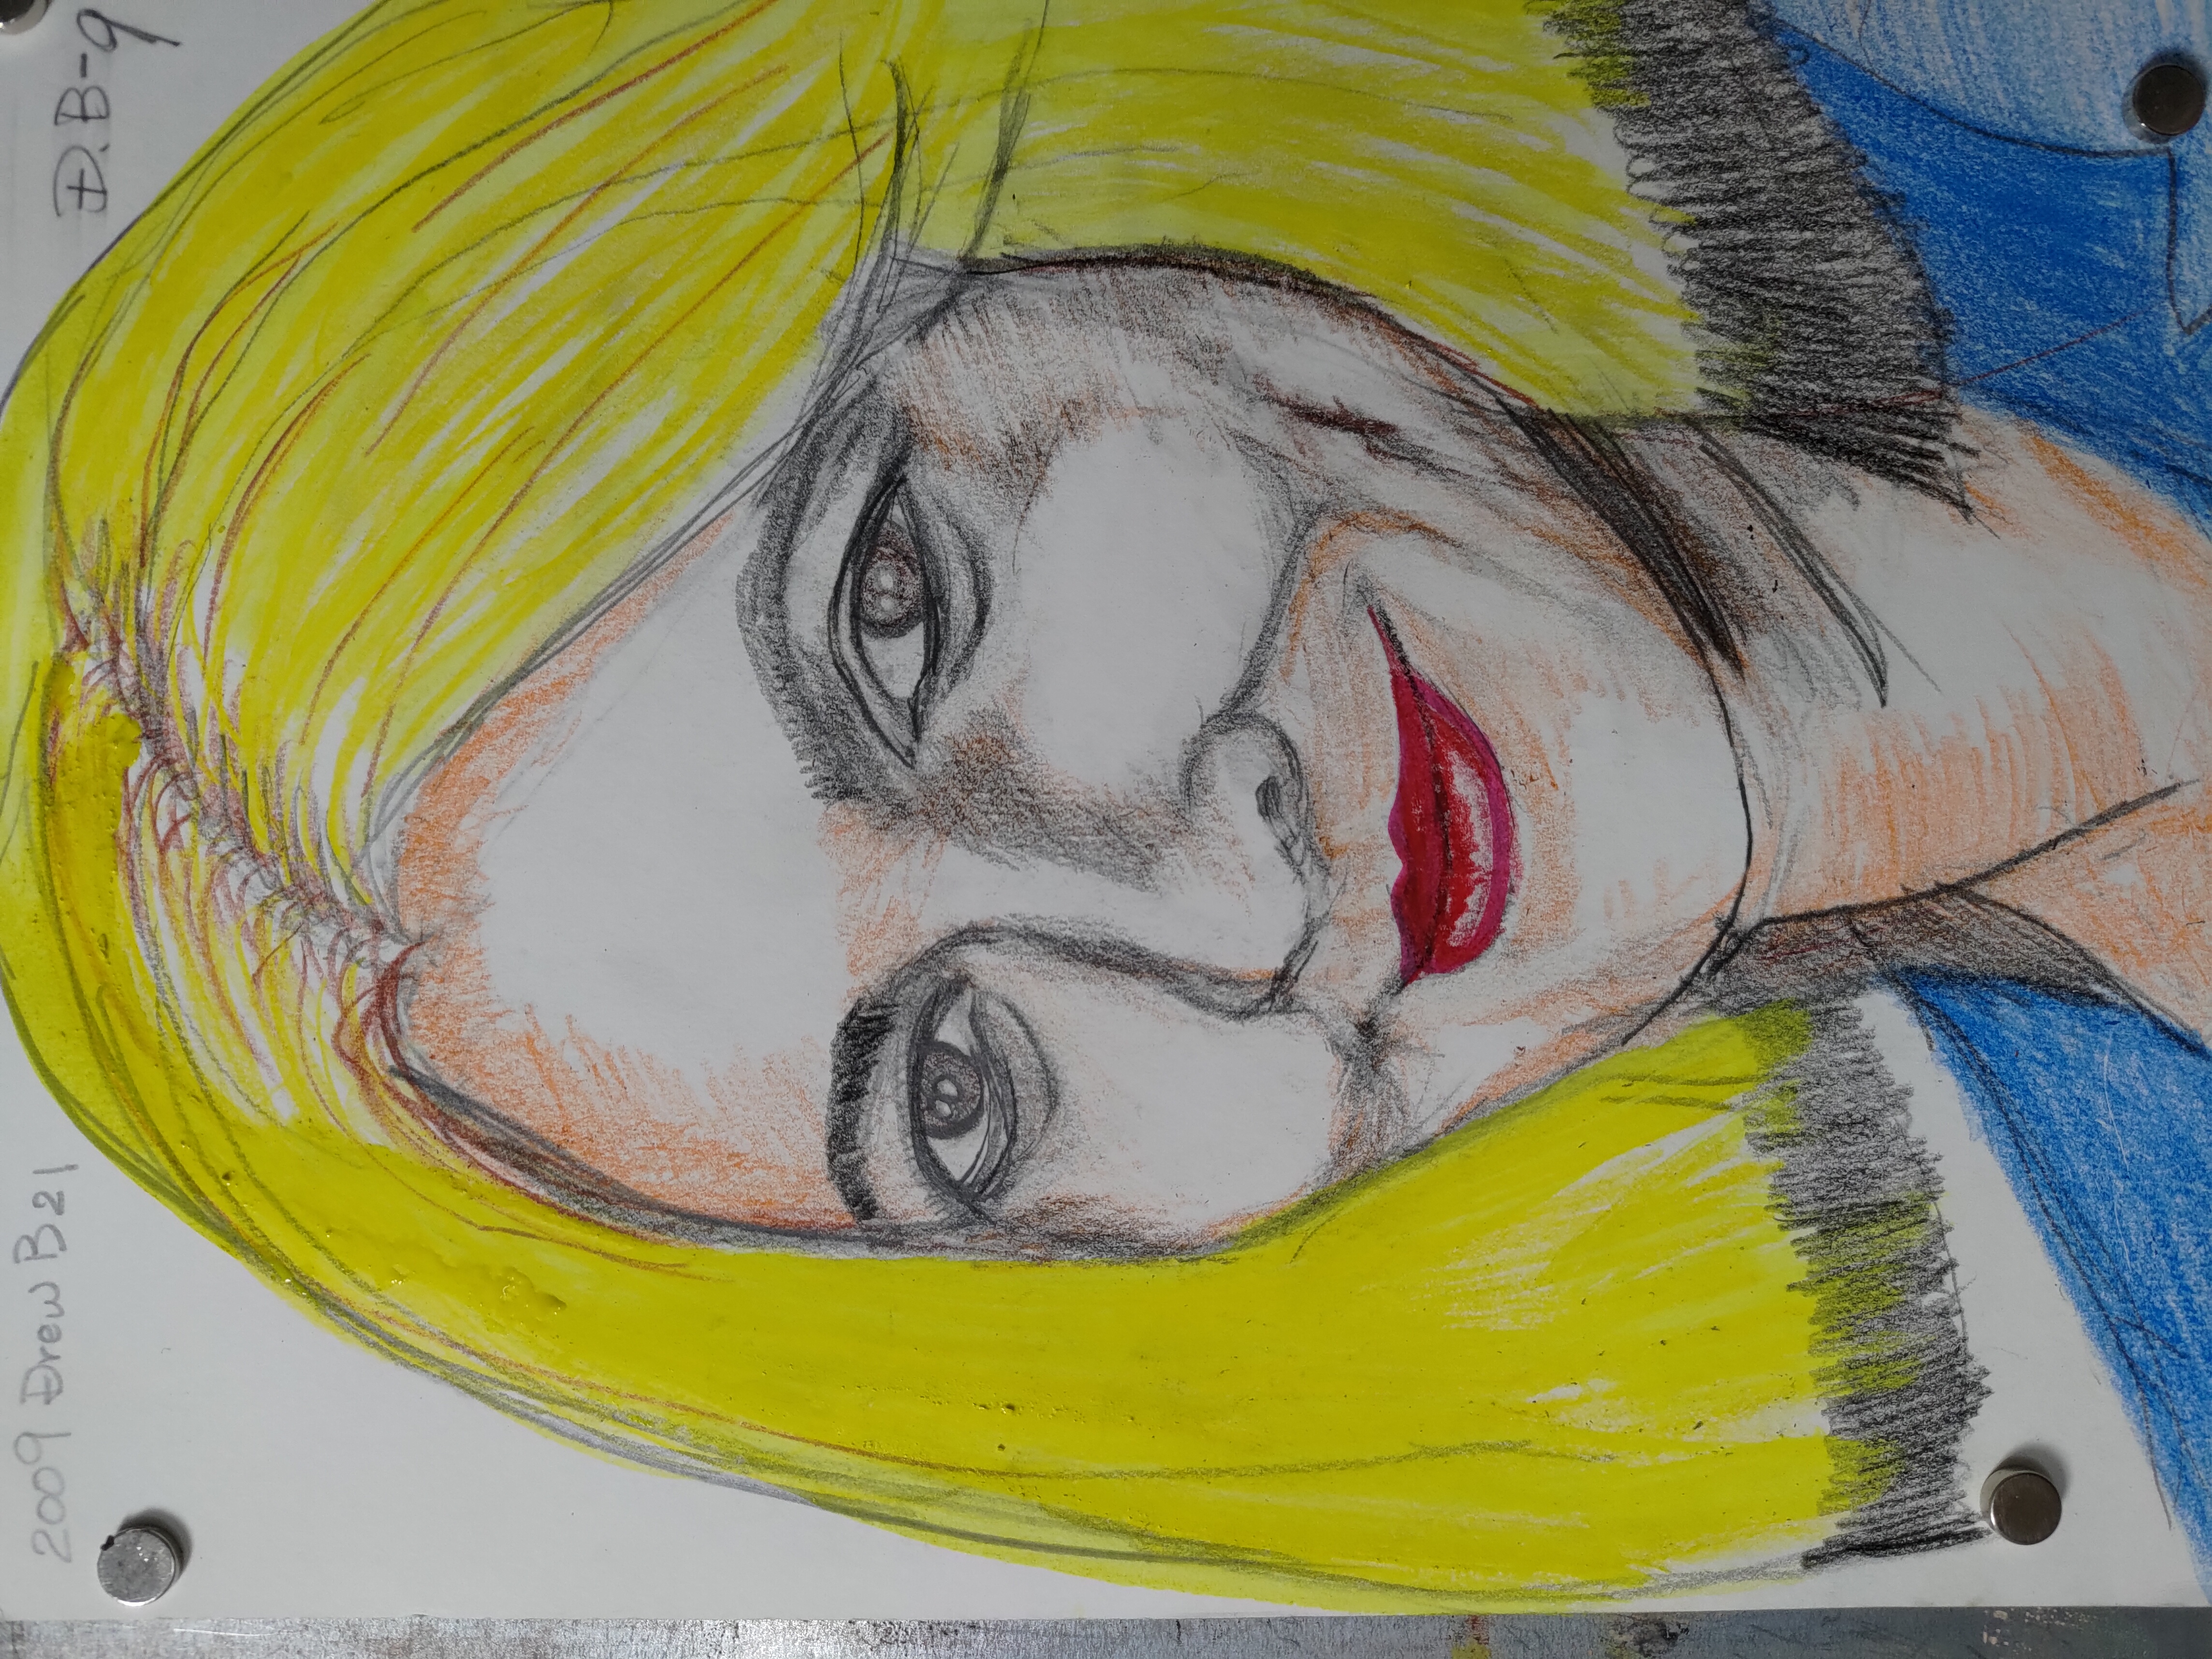 color sketch of Drew Barrymore